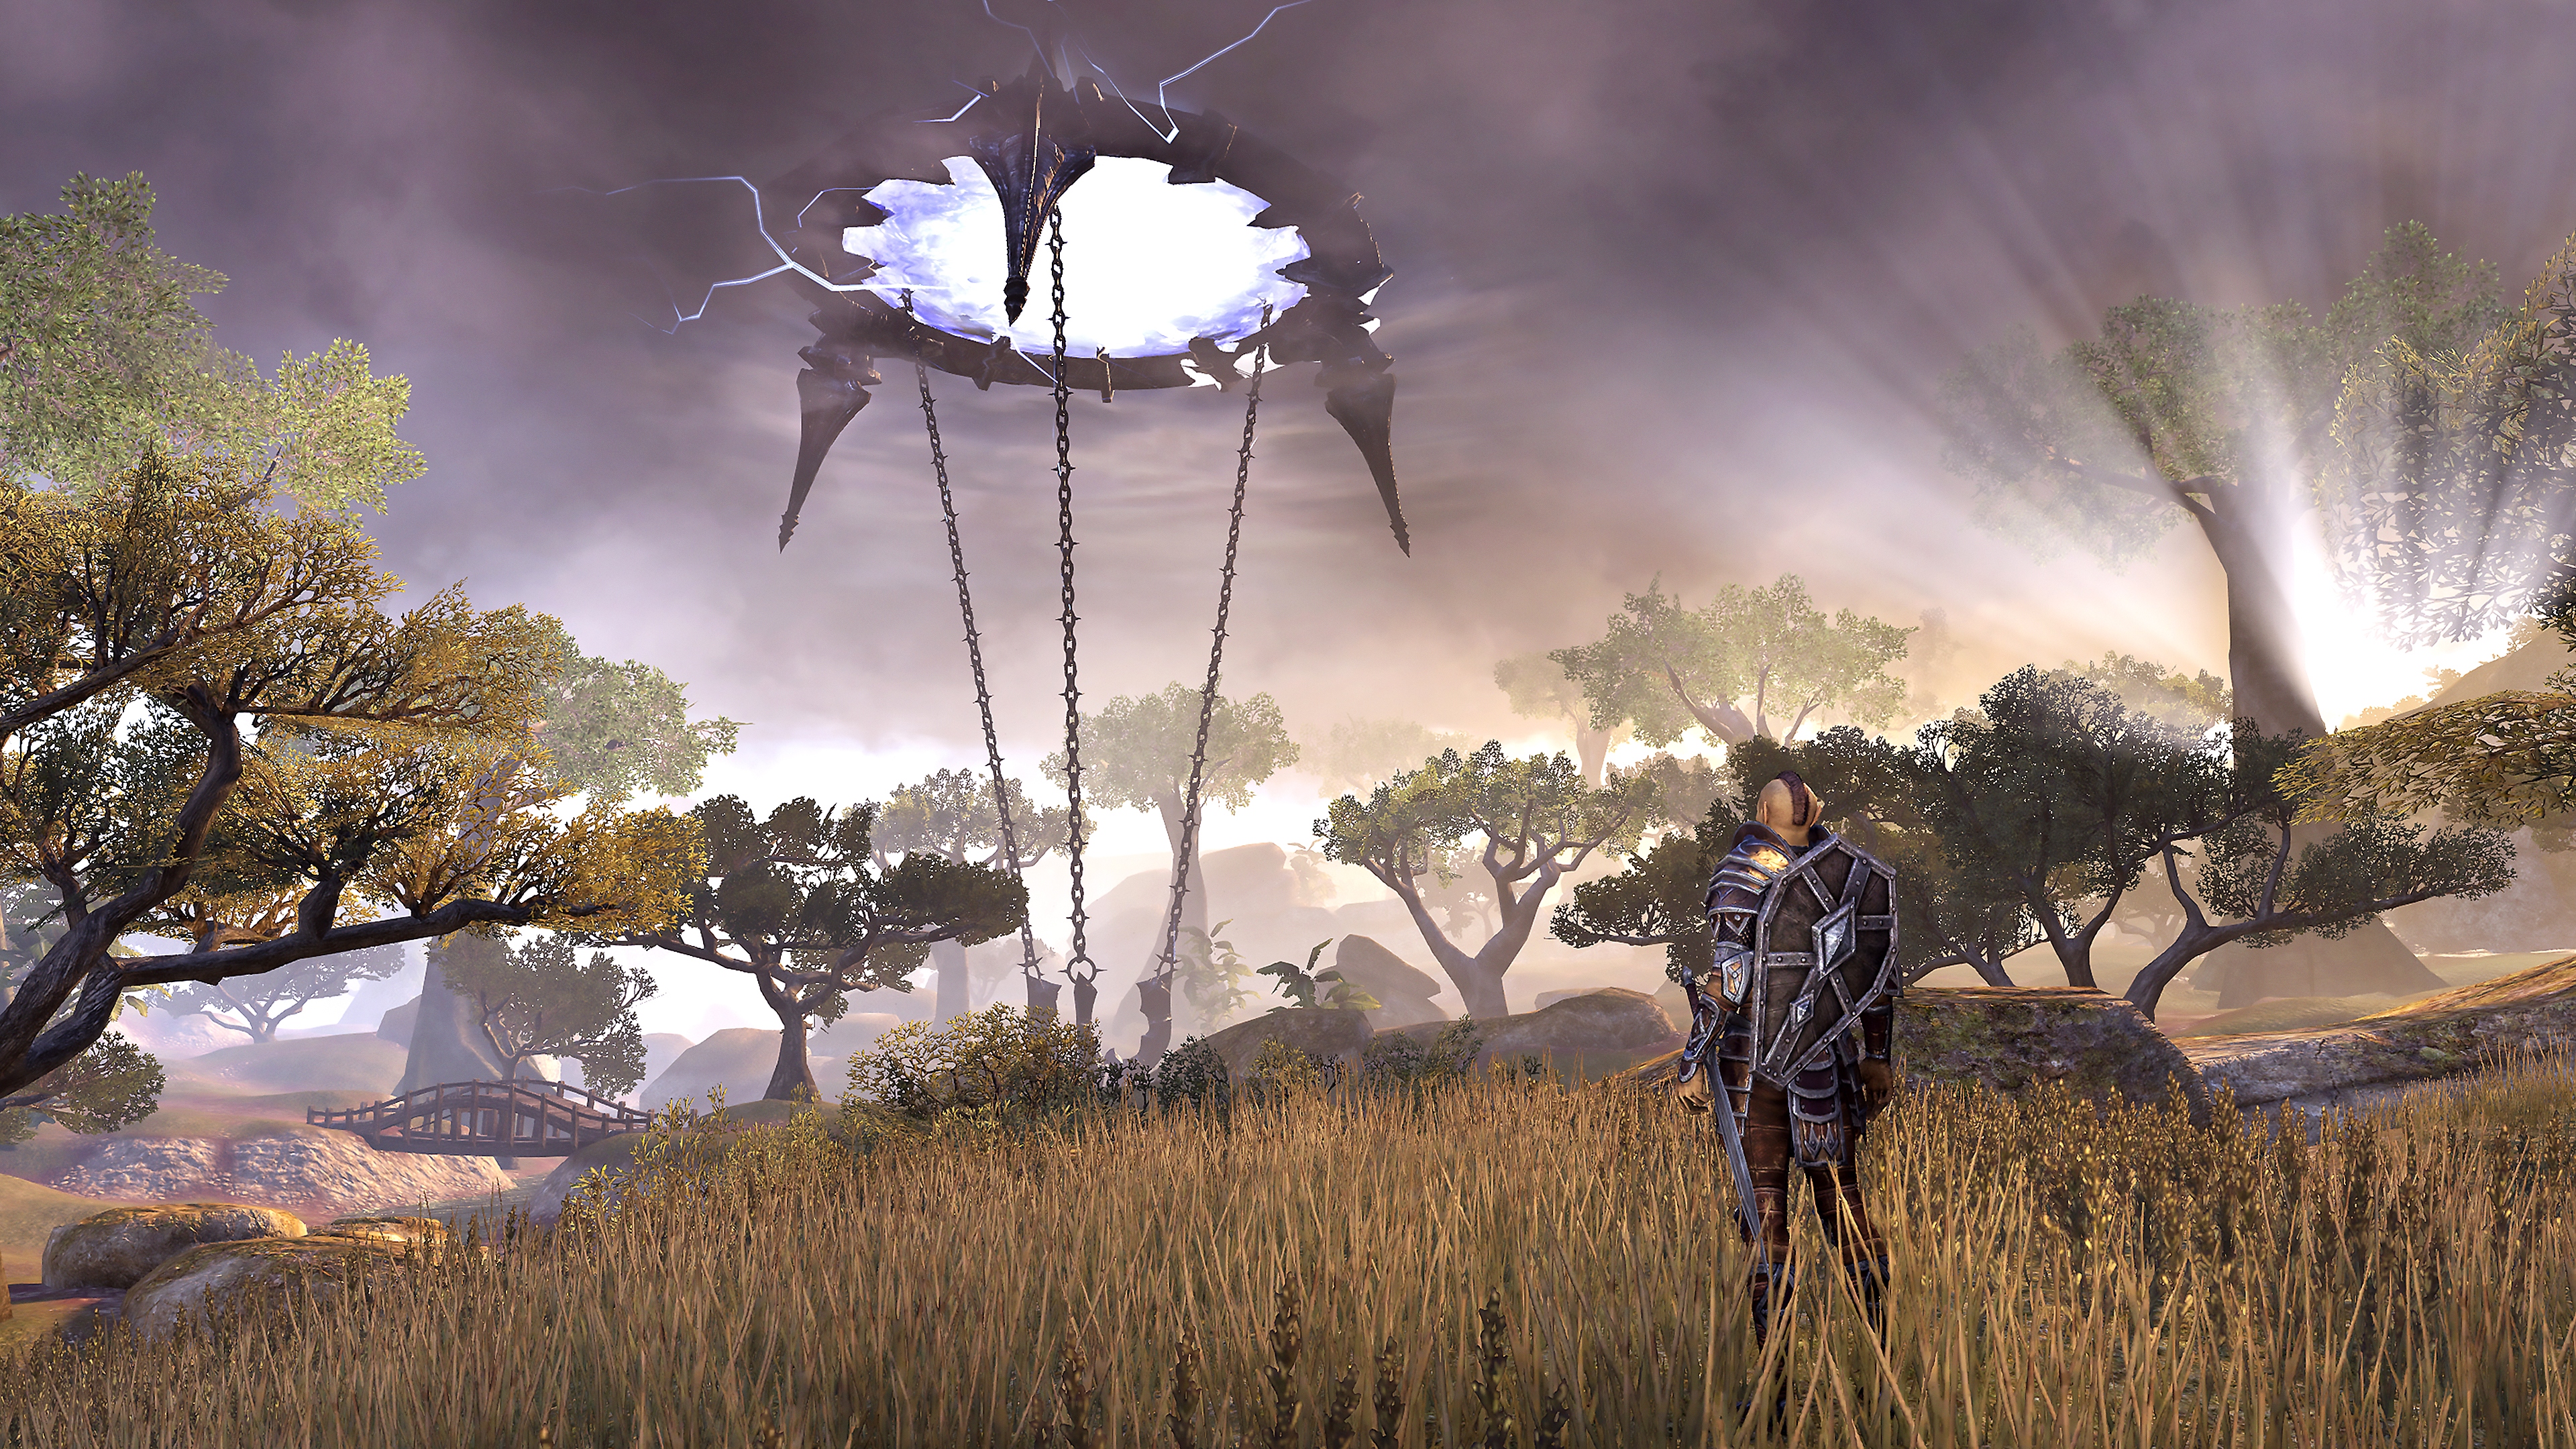 The Elder Scrolls Online - base game screenshot